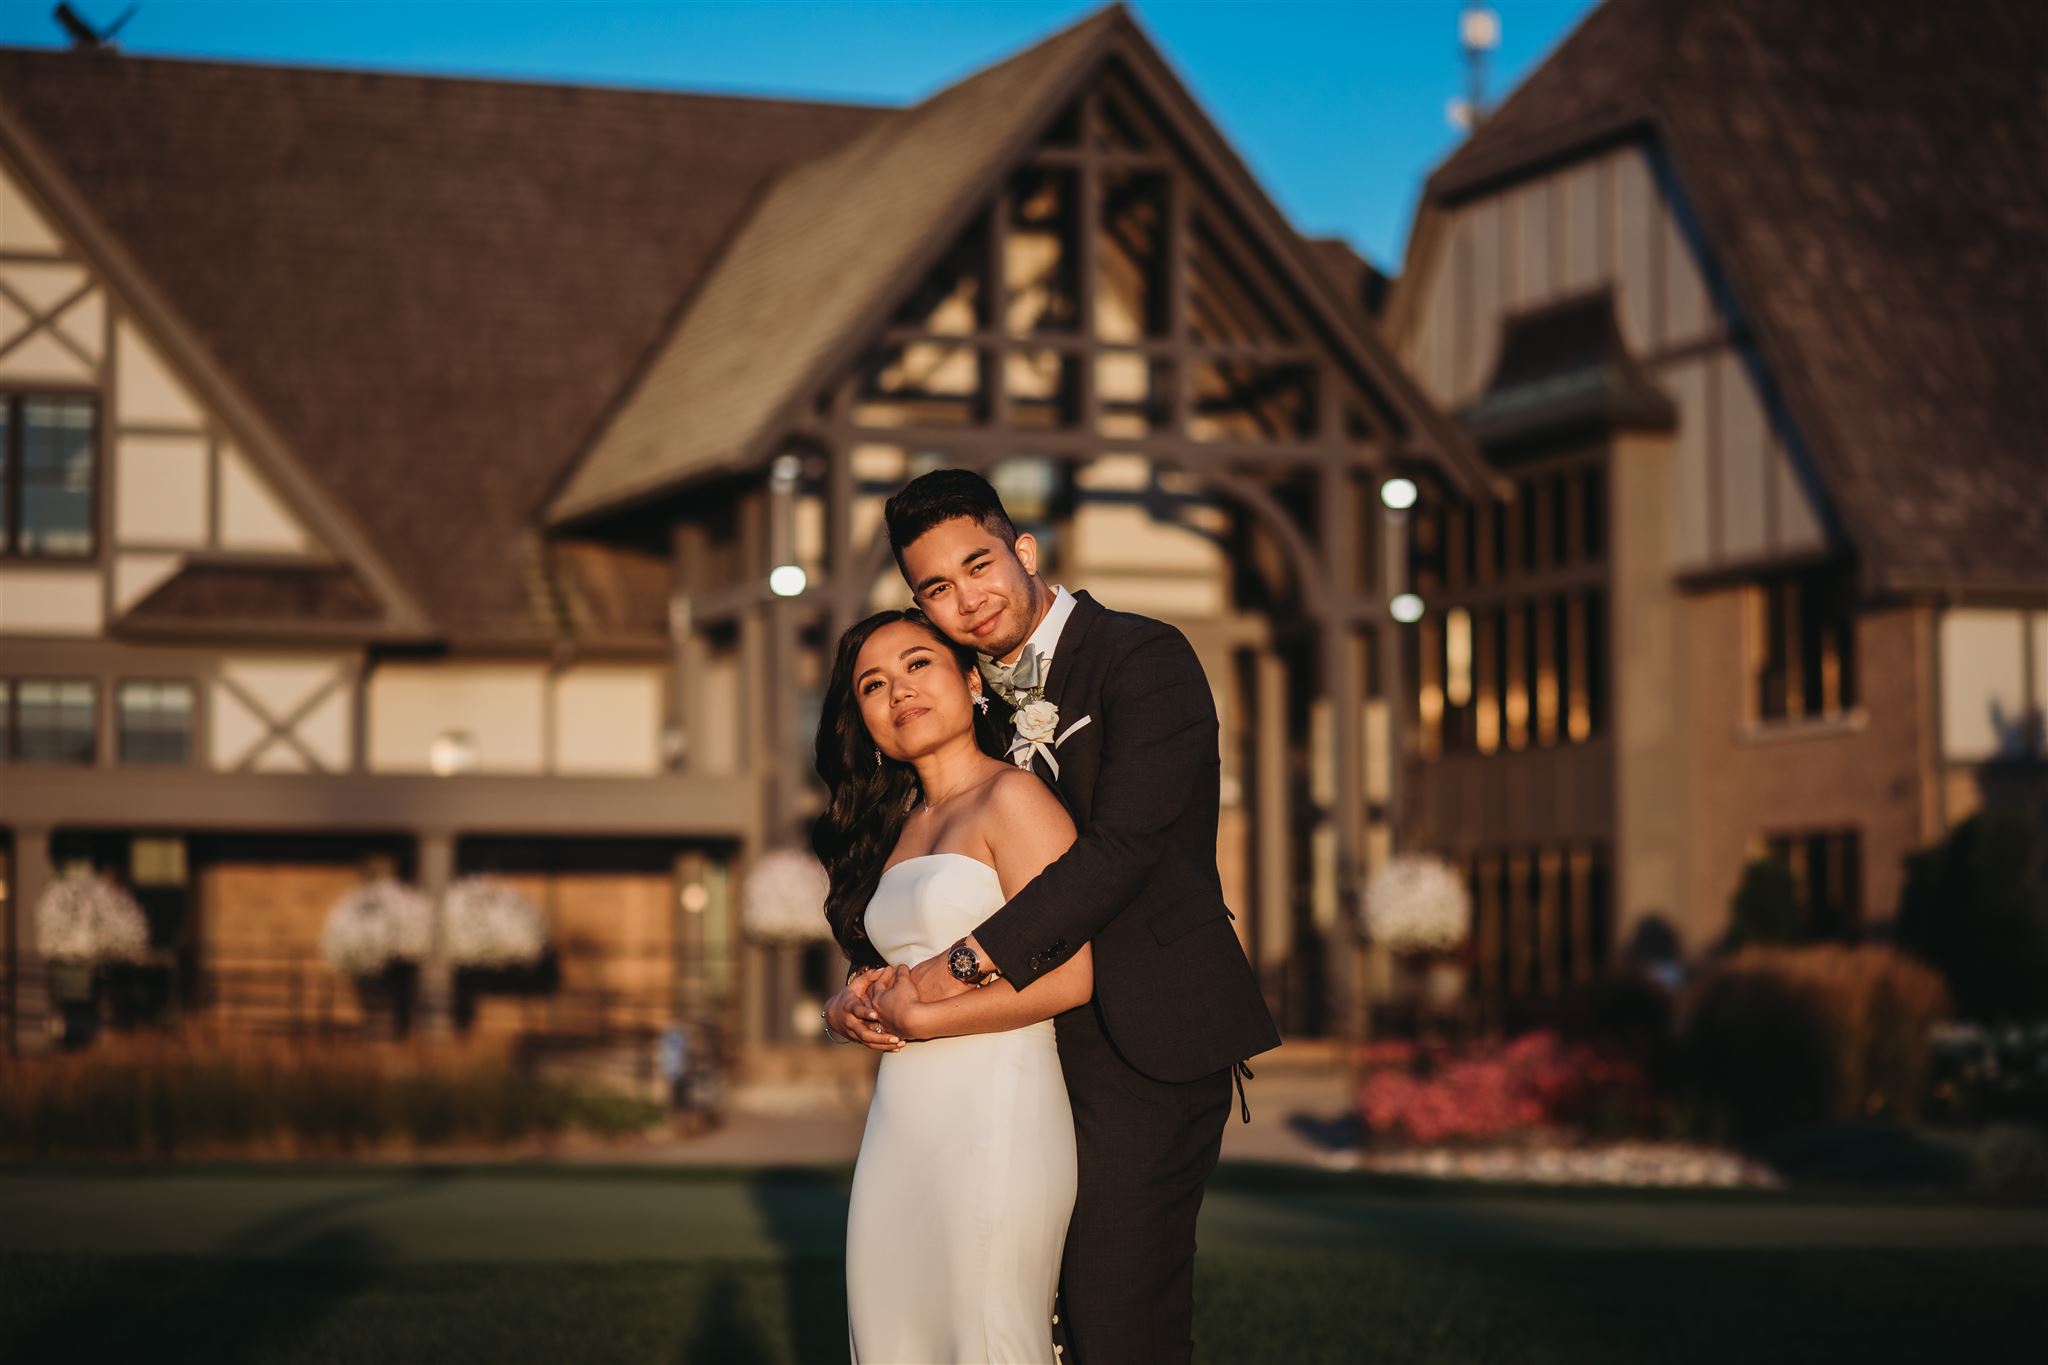 Do I Need a Second Wedding Photographer?